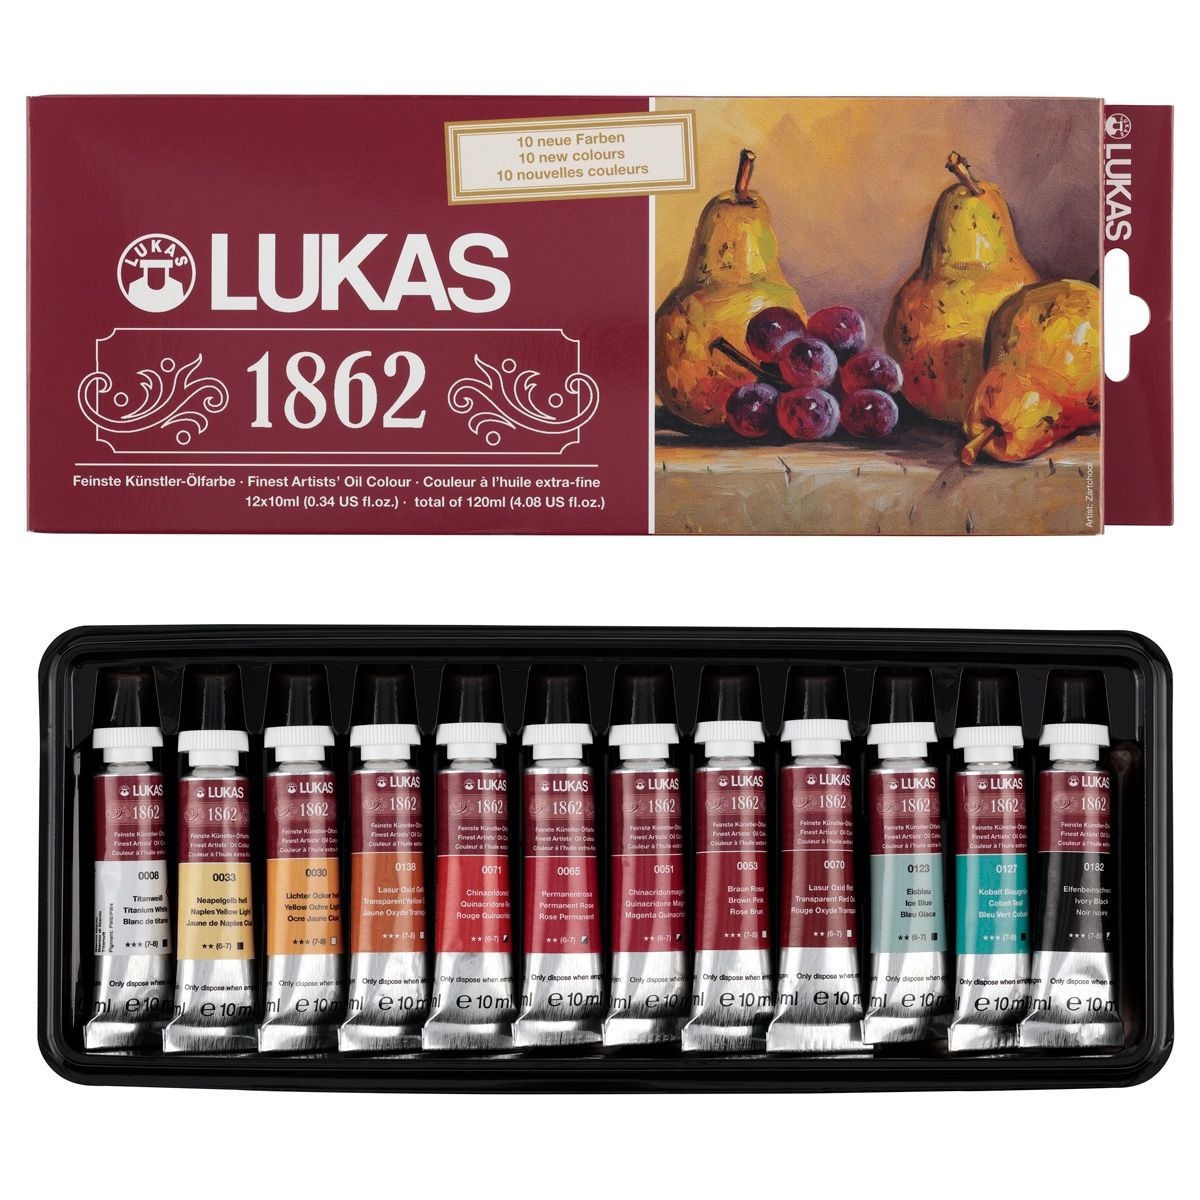 LUKAS 1862 Professional Oil Colors Set of 12